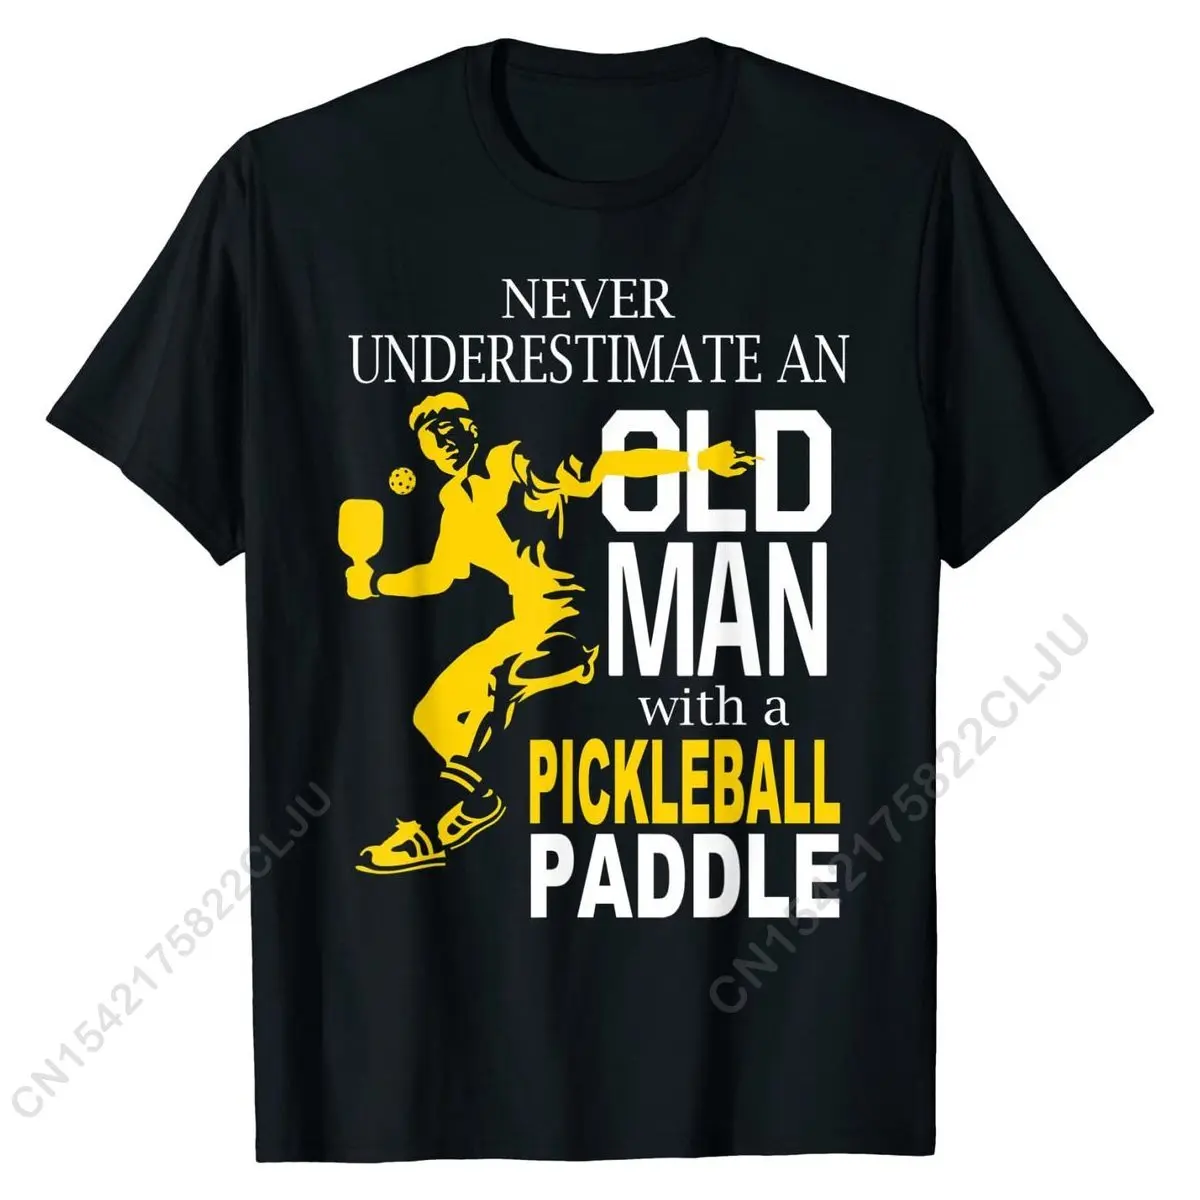 Nunca subscriba a Old Man con Pickleball Paddle, camiseta Popular para hombres, camisetas de algodón, Tops, camisa, grupo